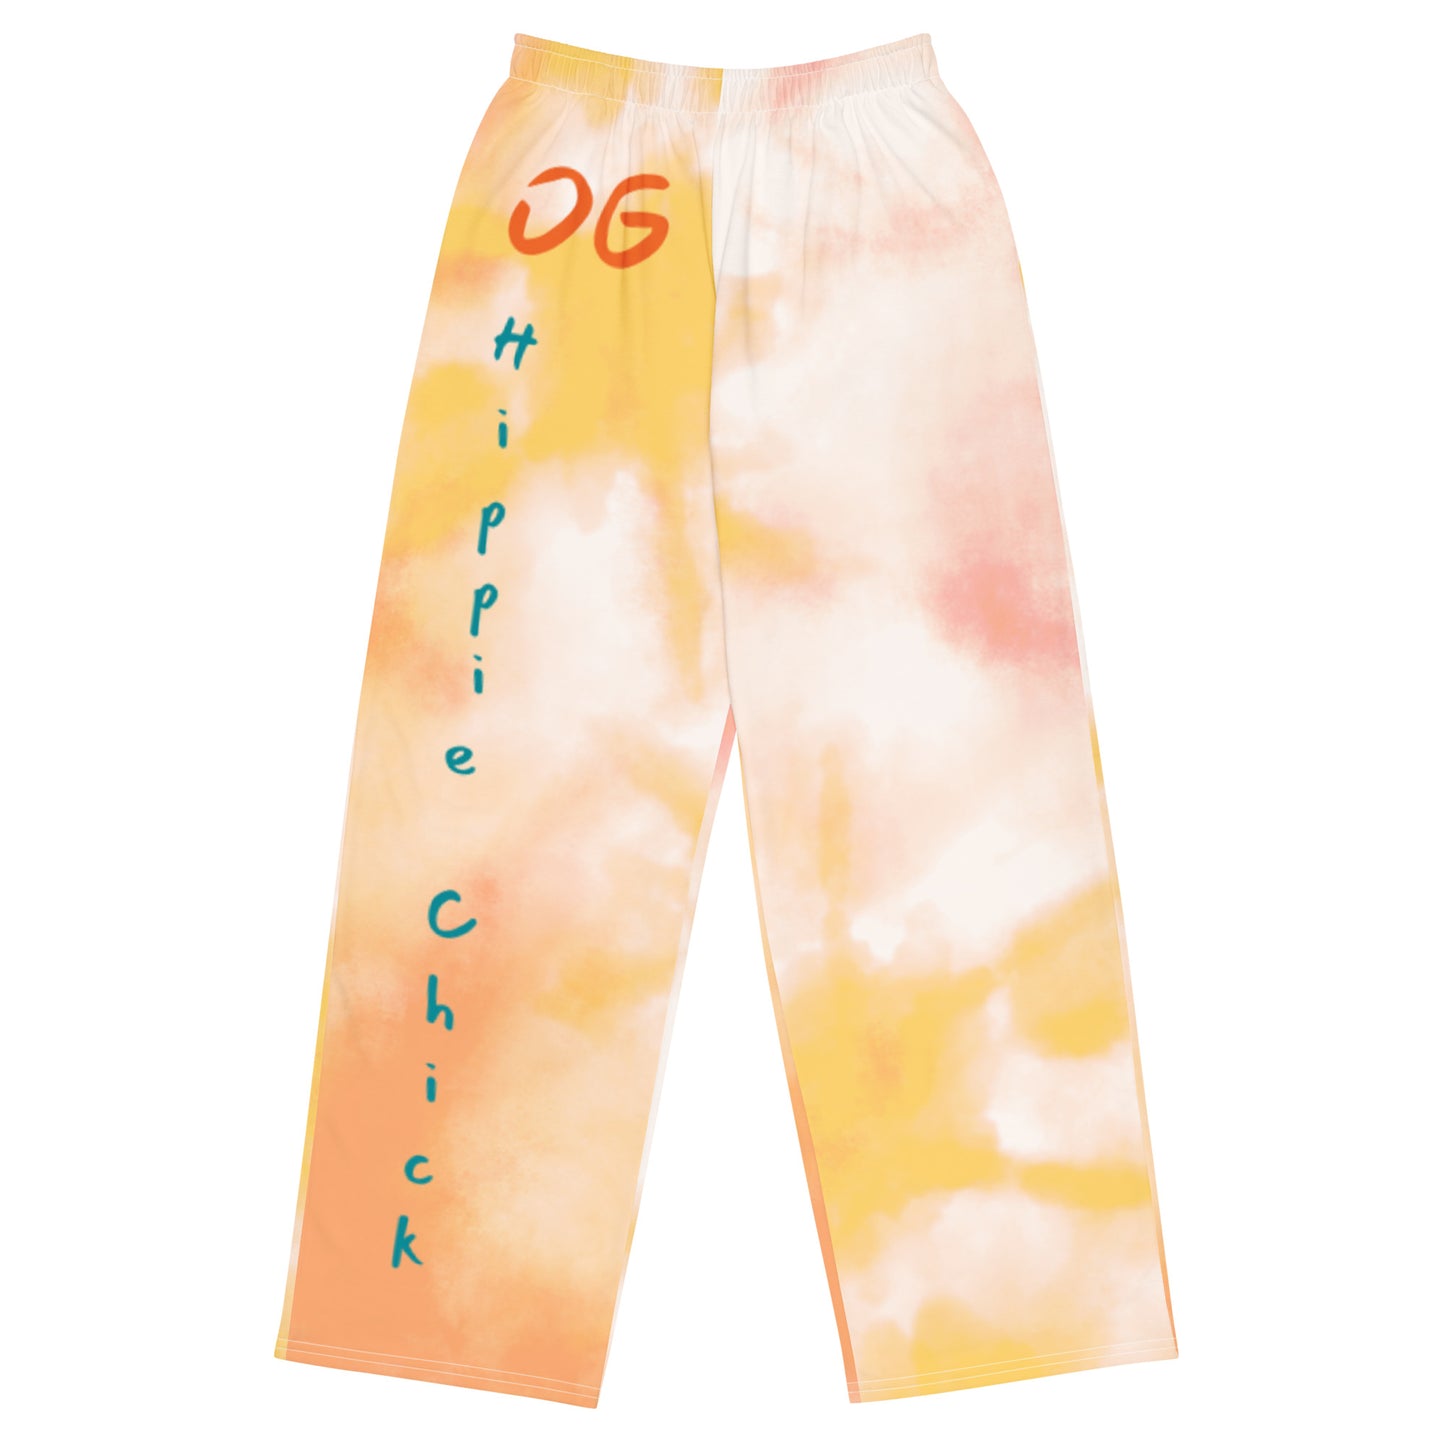 Pantalon Unisexe Tie Dye Orange - OG Hippie Chick